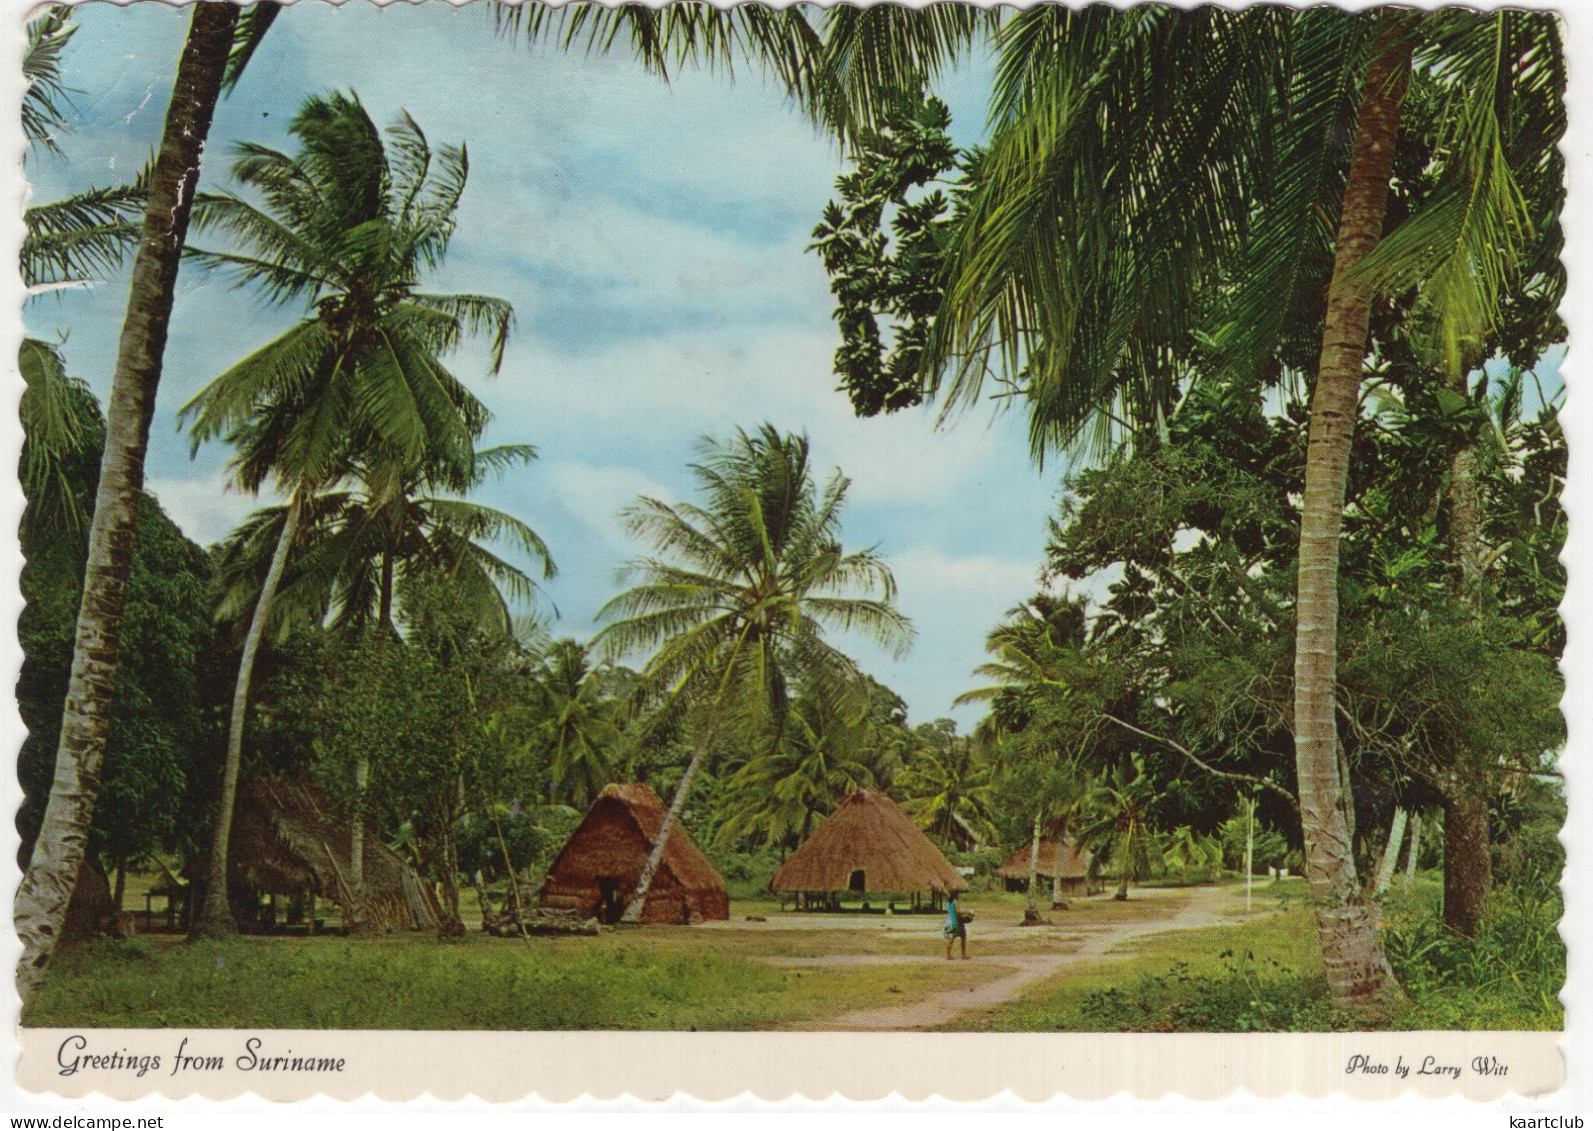 Greetings From Suriname: The Carib Village Of Bigi Ston-Marowijne District / Indianendorp Bigi Ston A/d Marowijne Rivier - Suriname